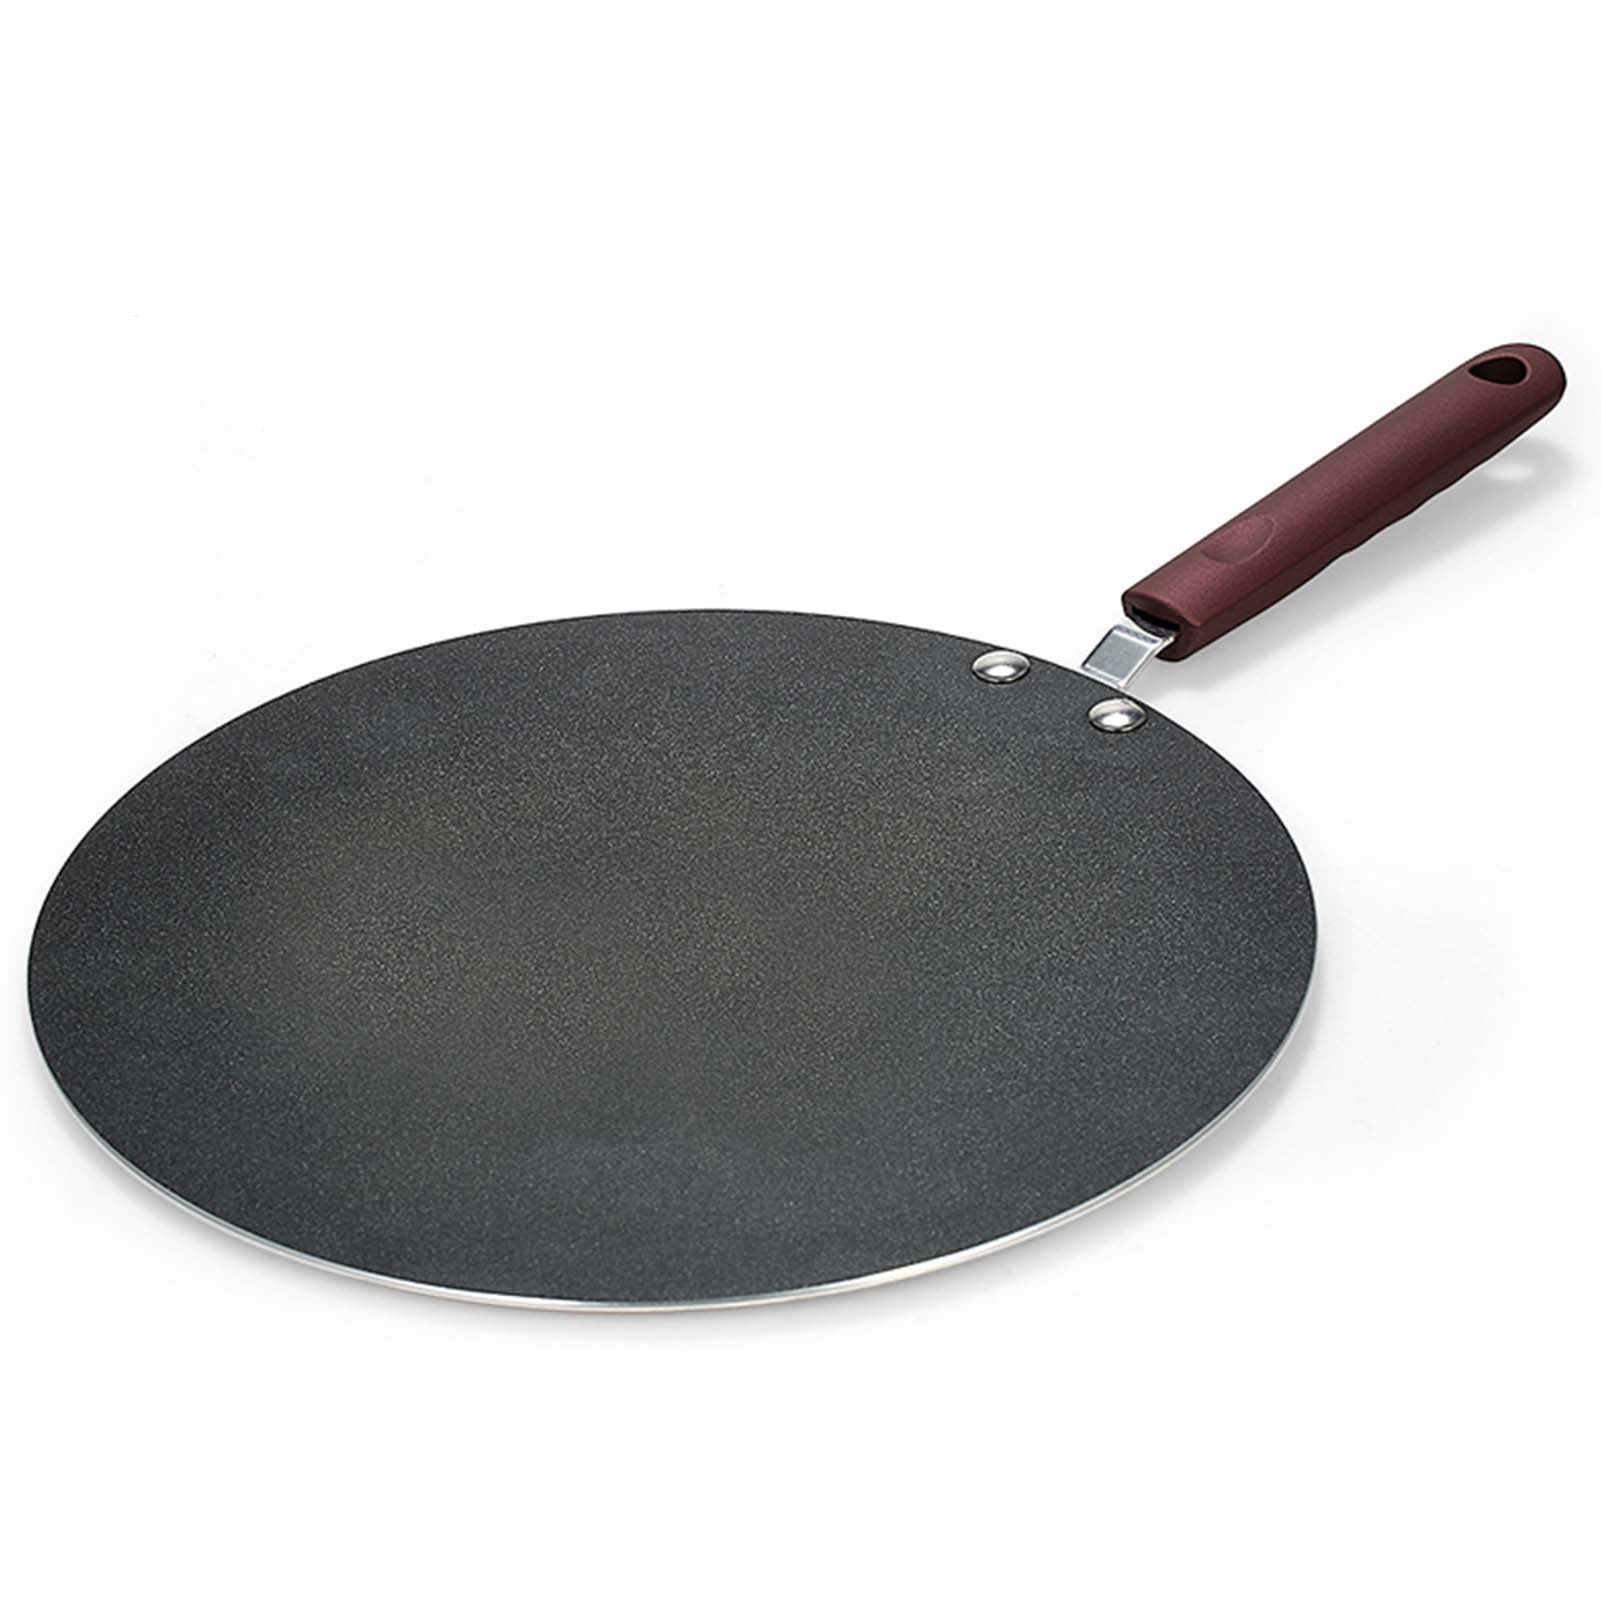 Crepe Pan, Nonstick Dosa Pan for Stovetops, Tortilla Pan for Cooktop -  AliExpress